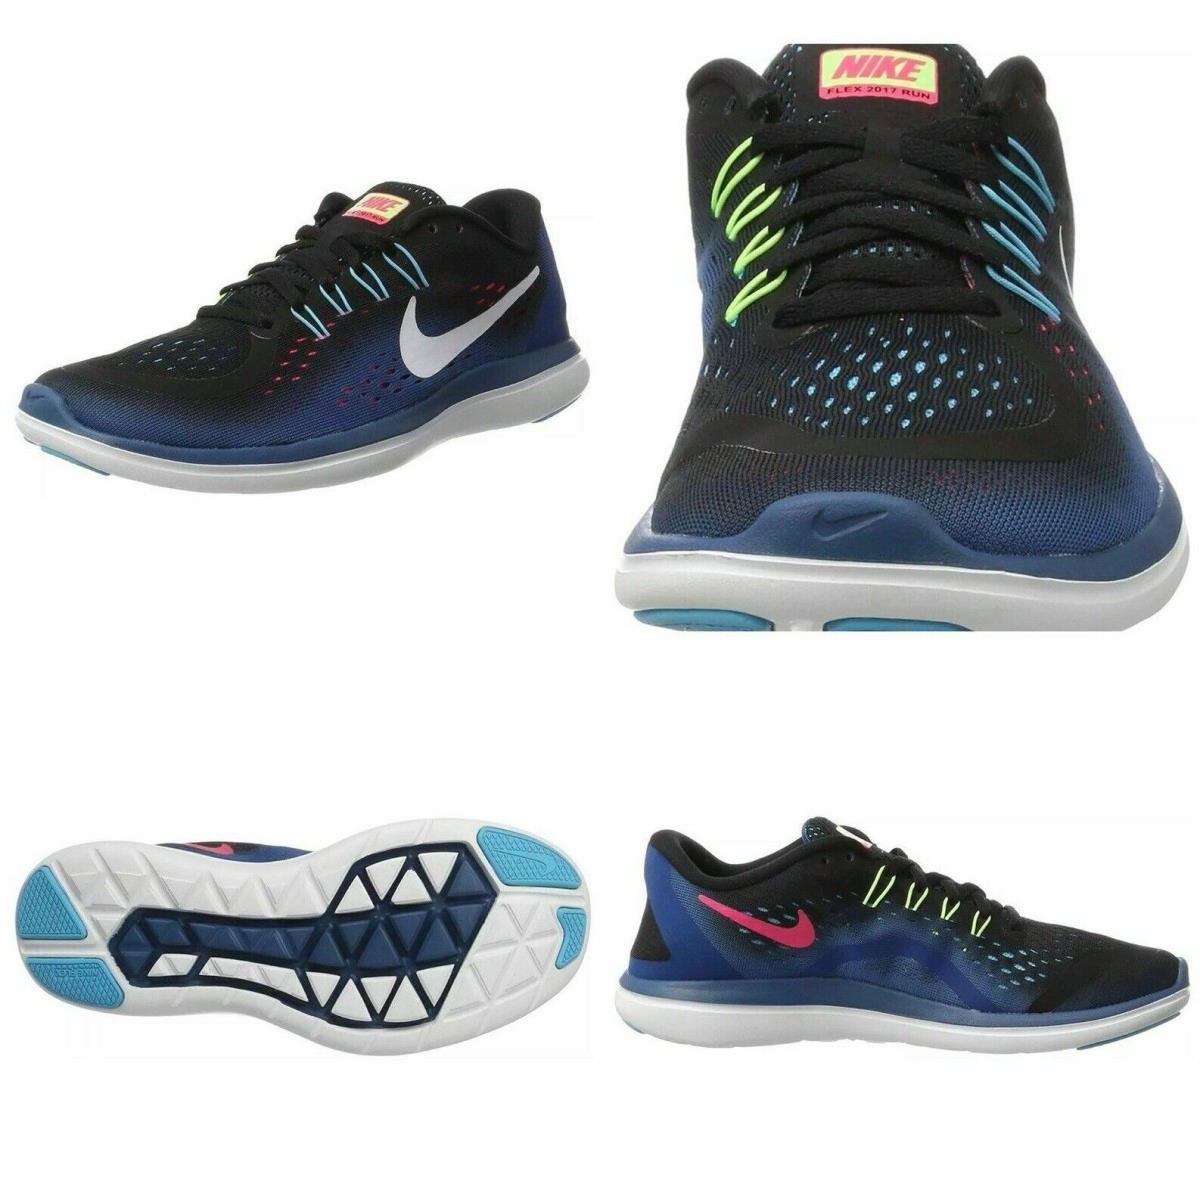 Women`s Nike 898476 004 Flex 2017 RN Running Training Shoes Sneakers Size: 11.5